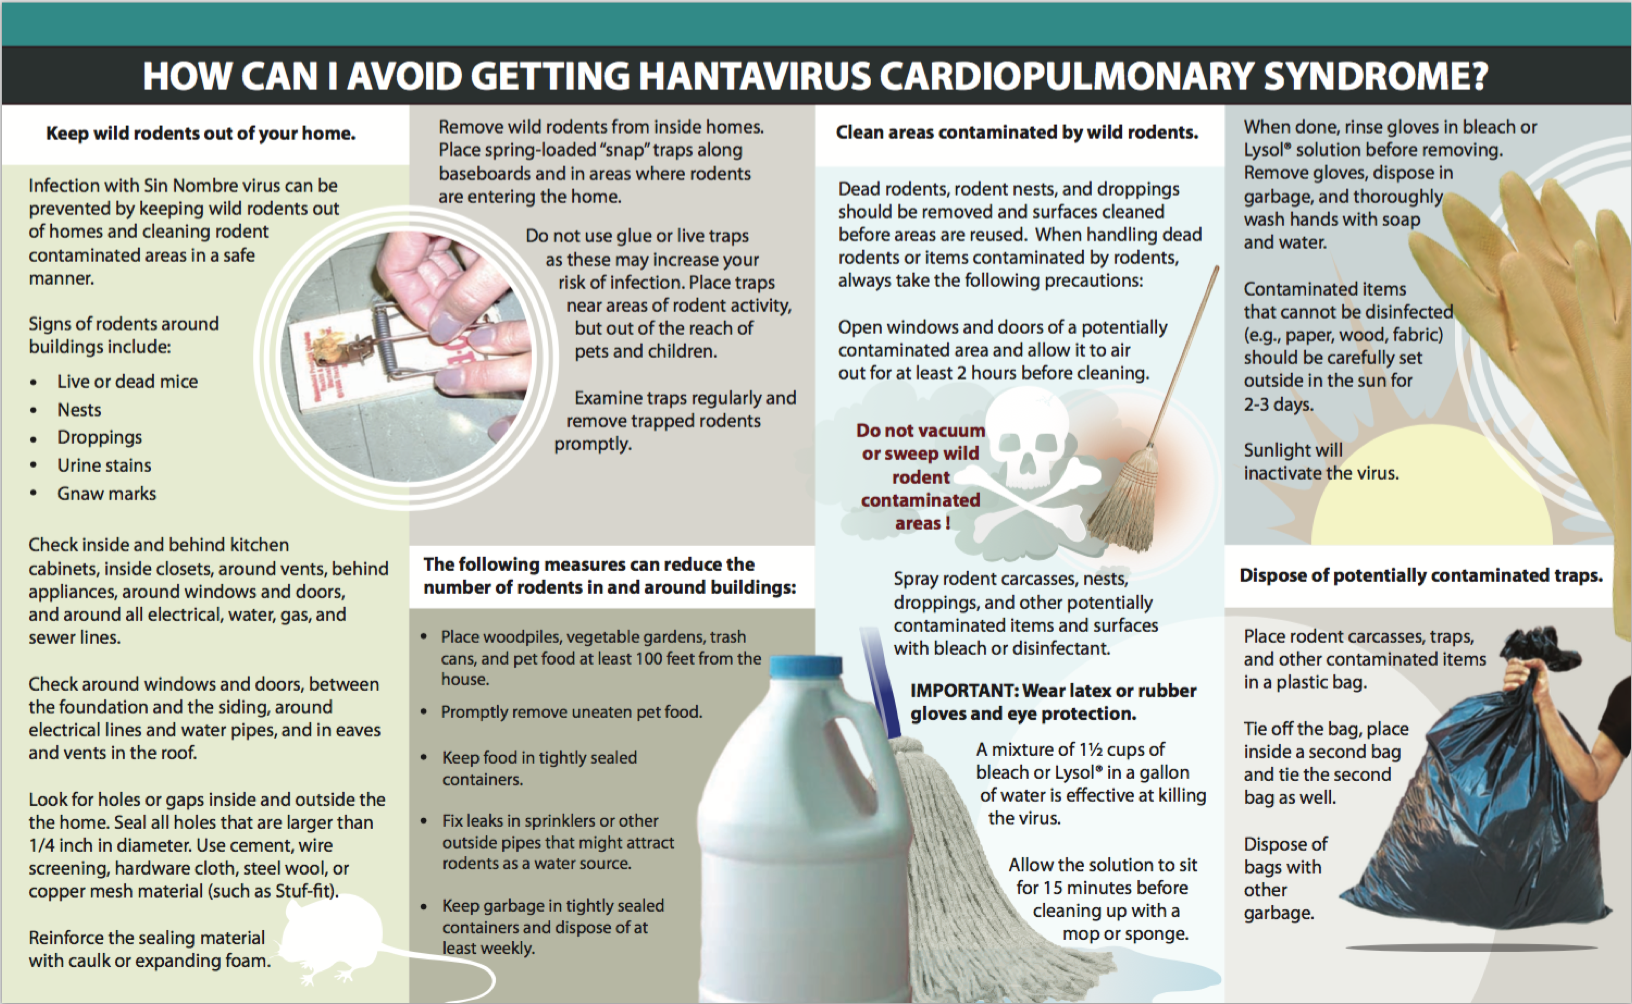 How Can I Avoid Getting Hantavirus Cardiopulmonary Syndrome?